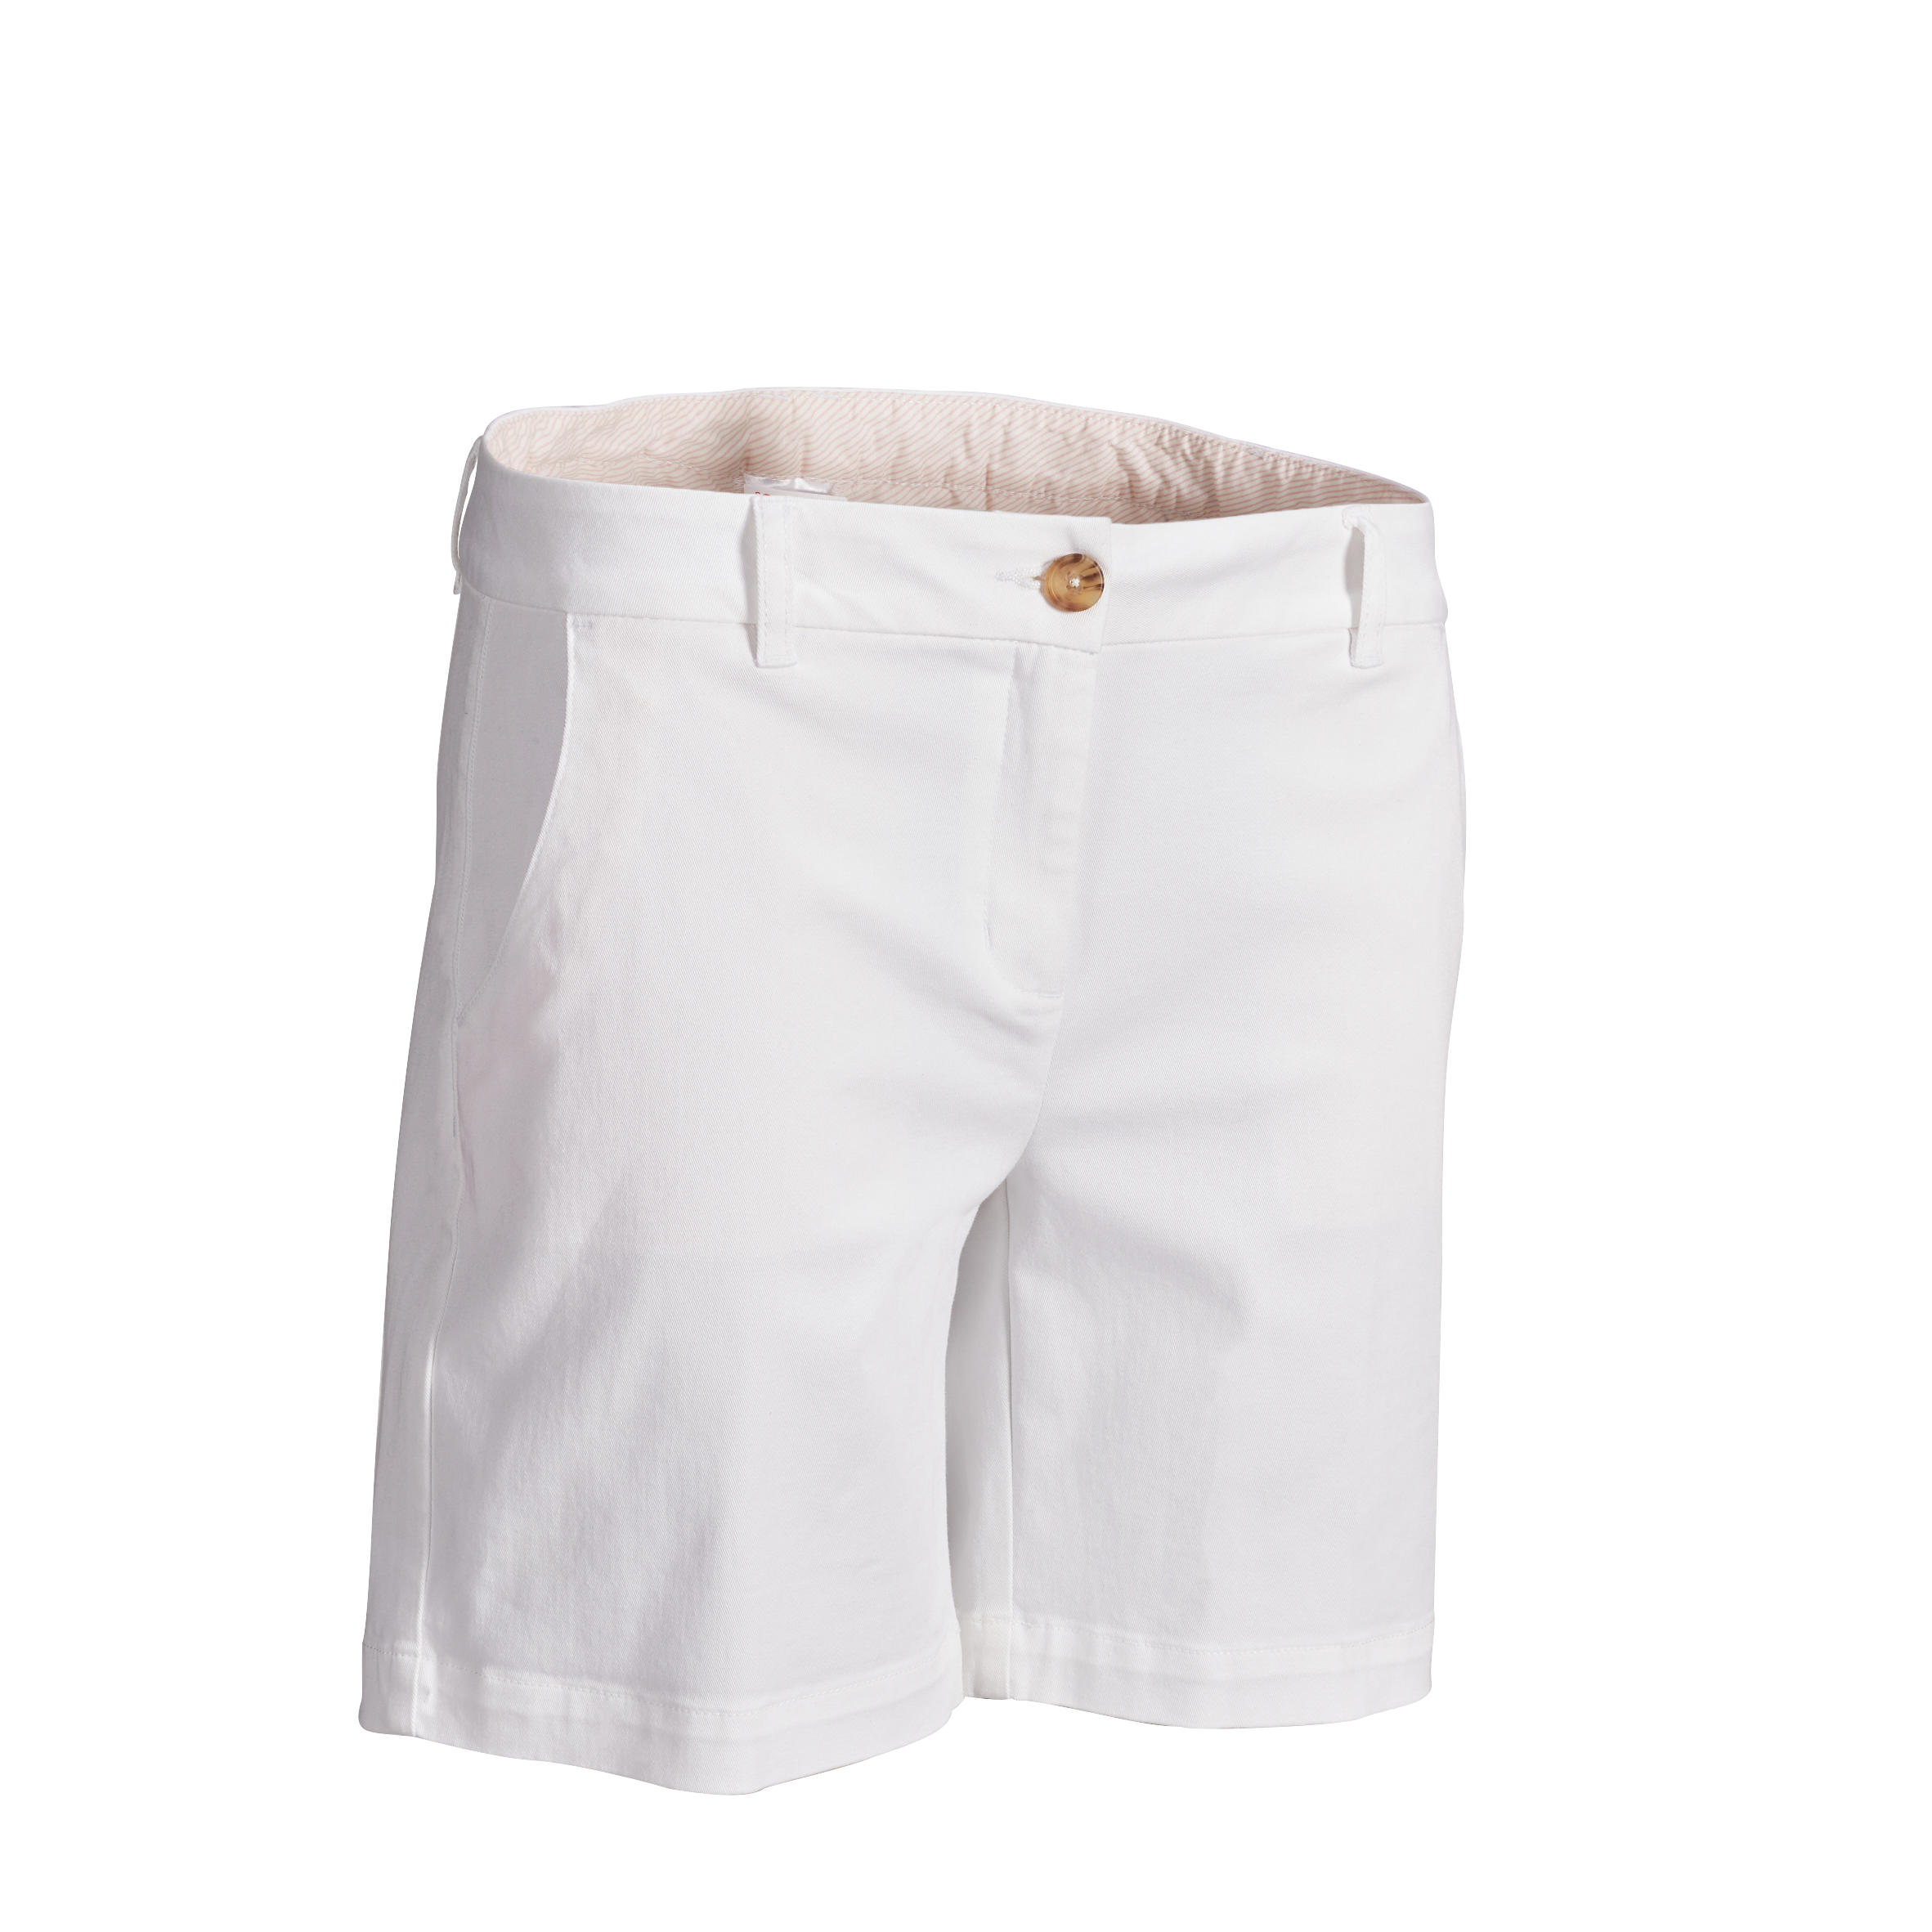 decathlon bermuda shorts